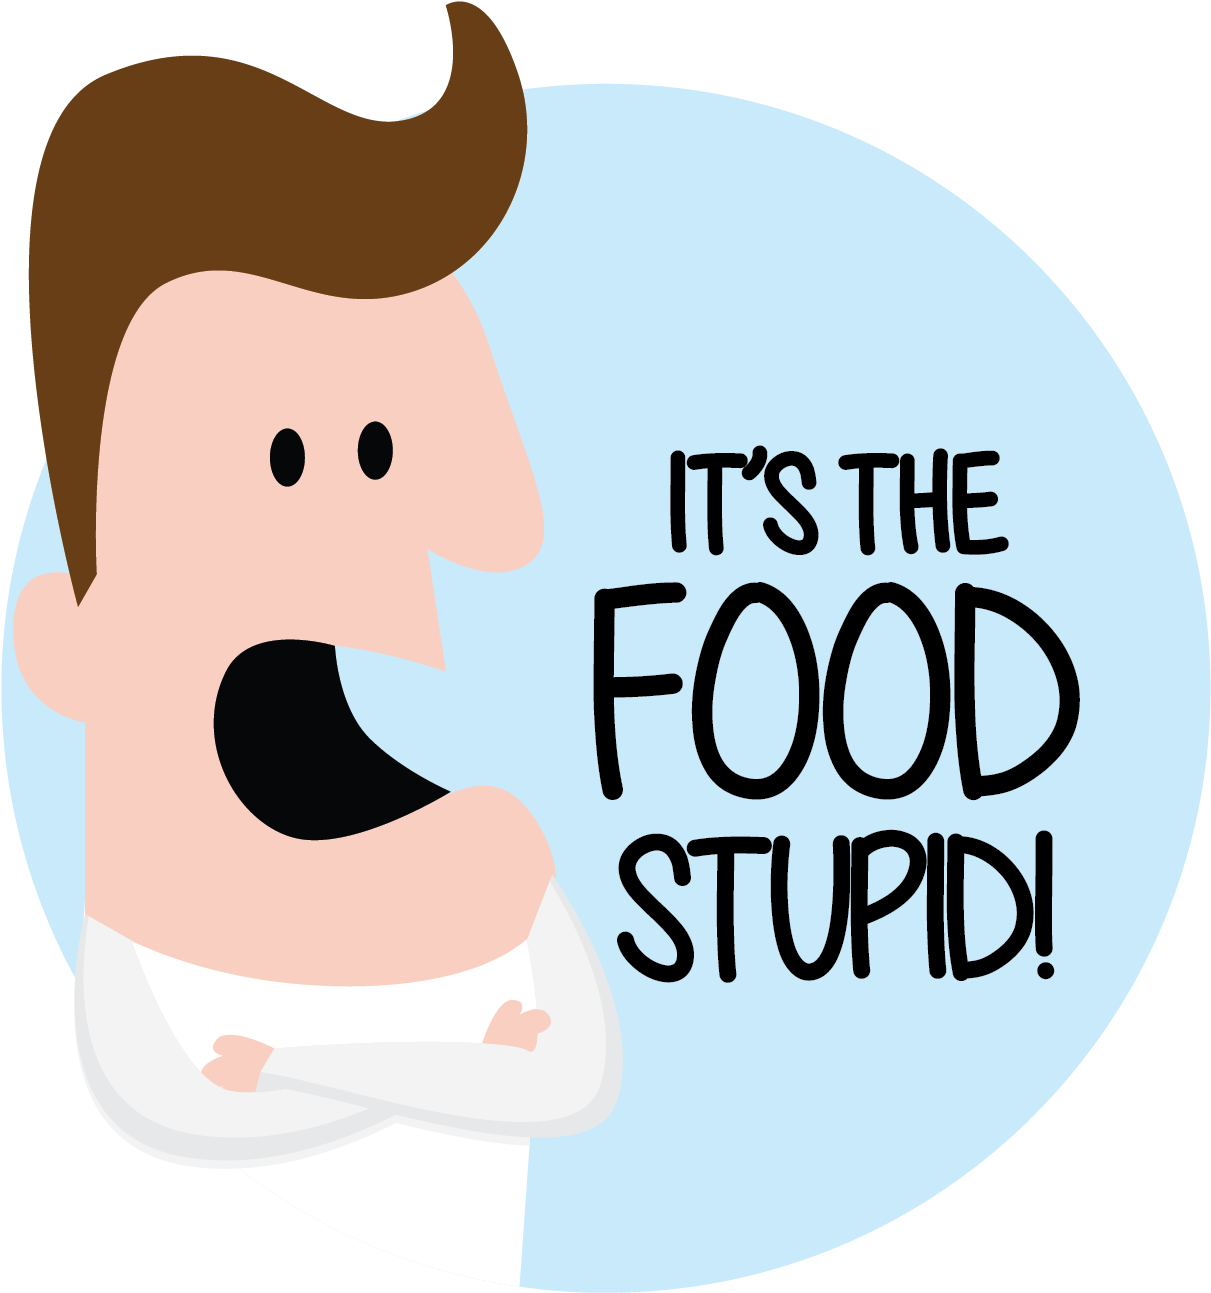 It's The Food Stupid - It's The Food Stupid (1400x1400)